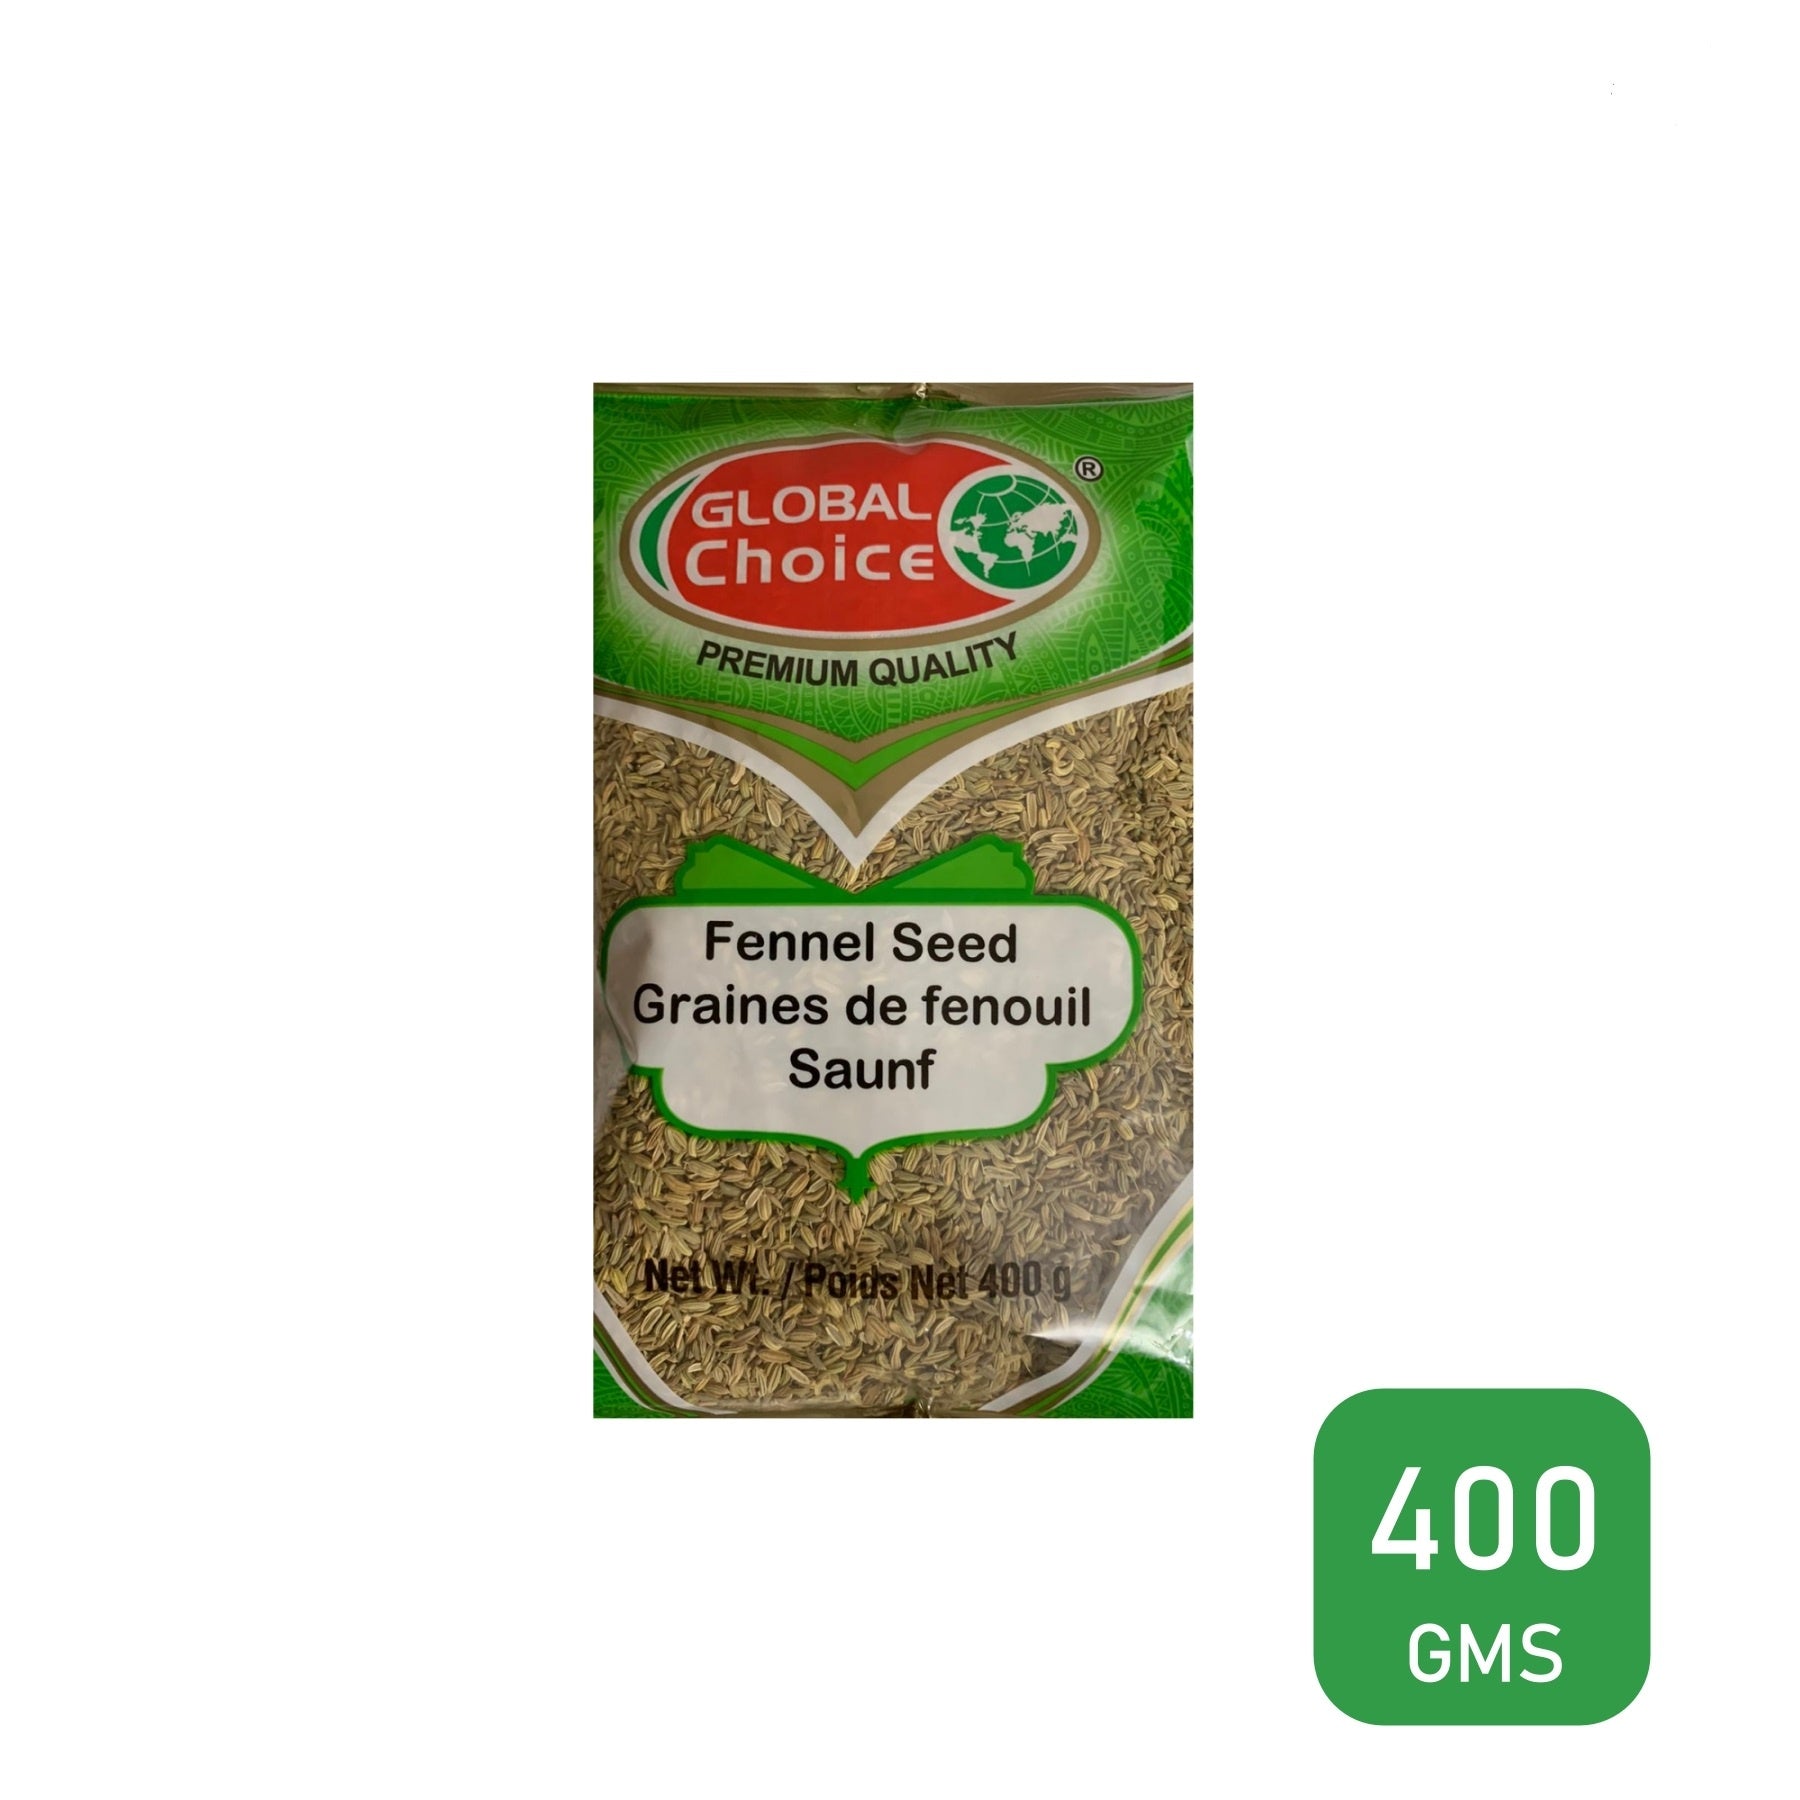 Global Choice - Fennel Seed 200g